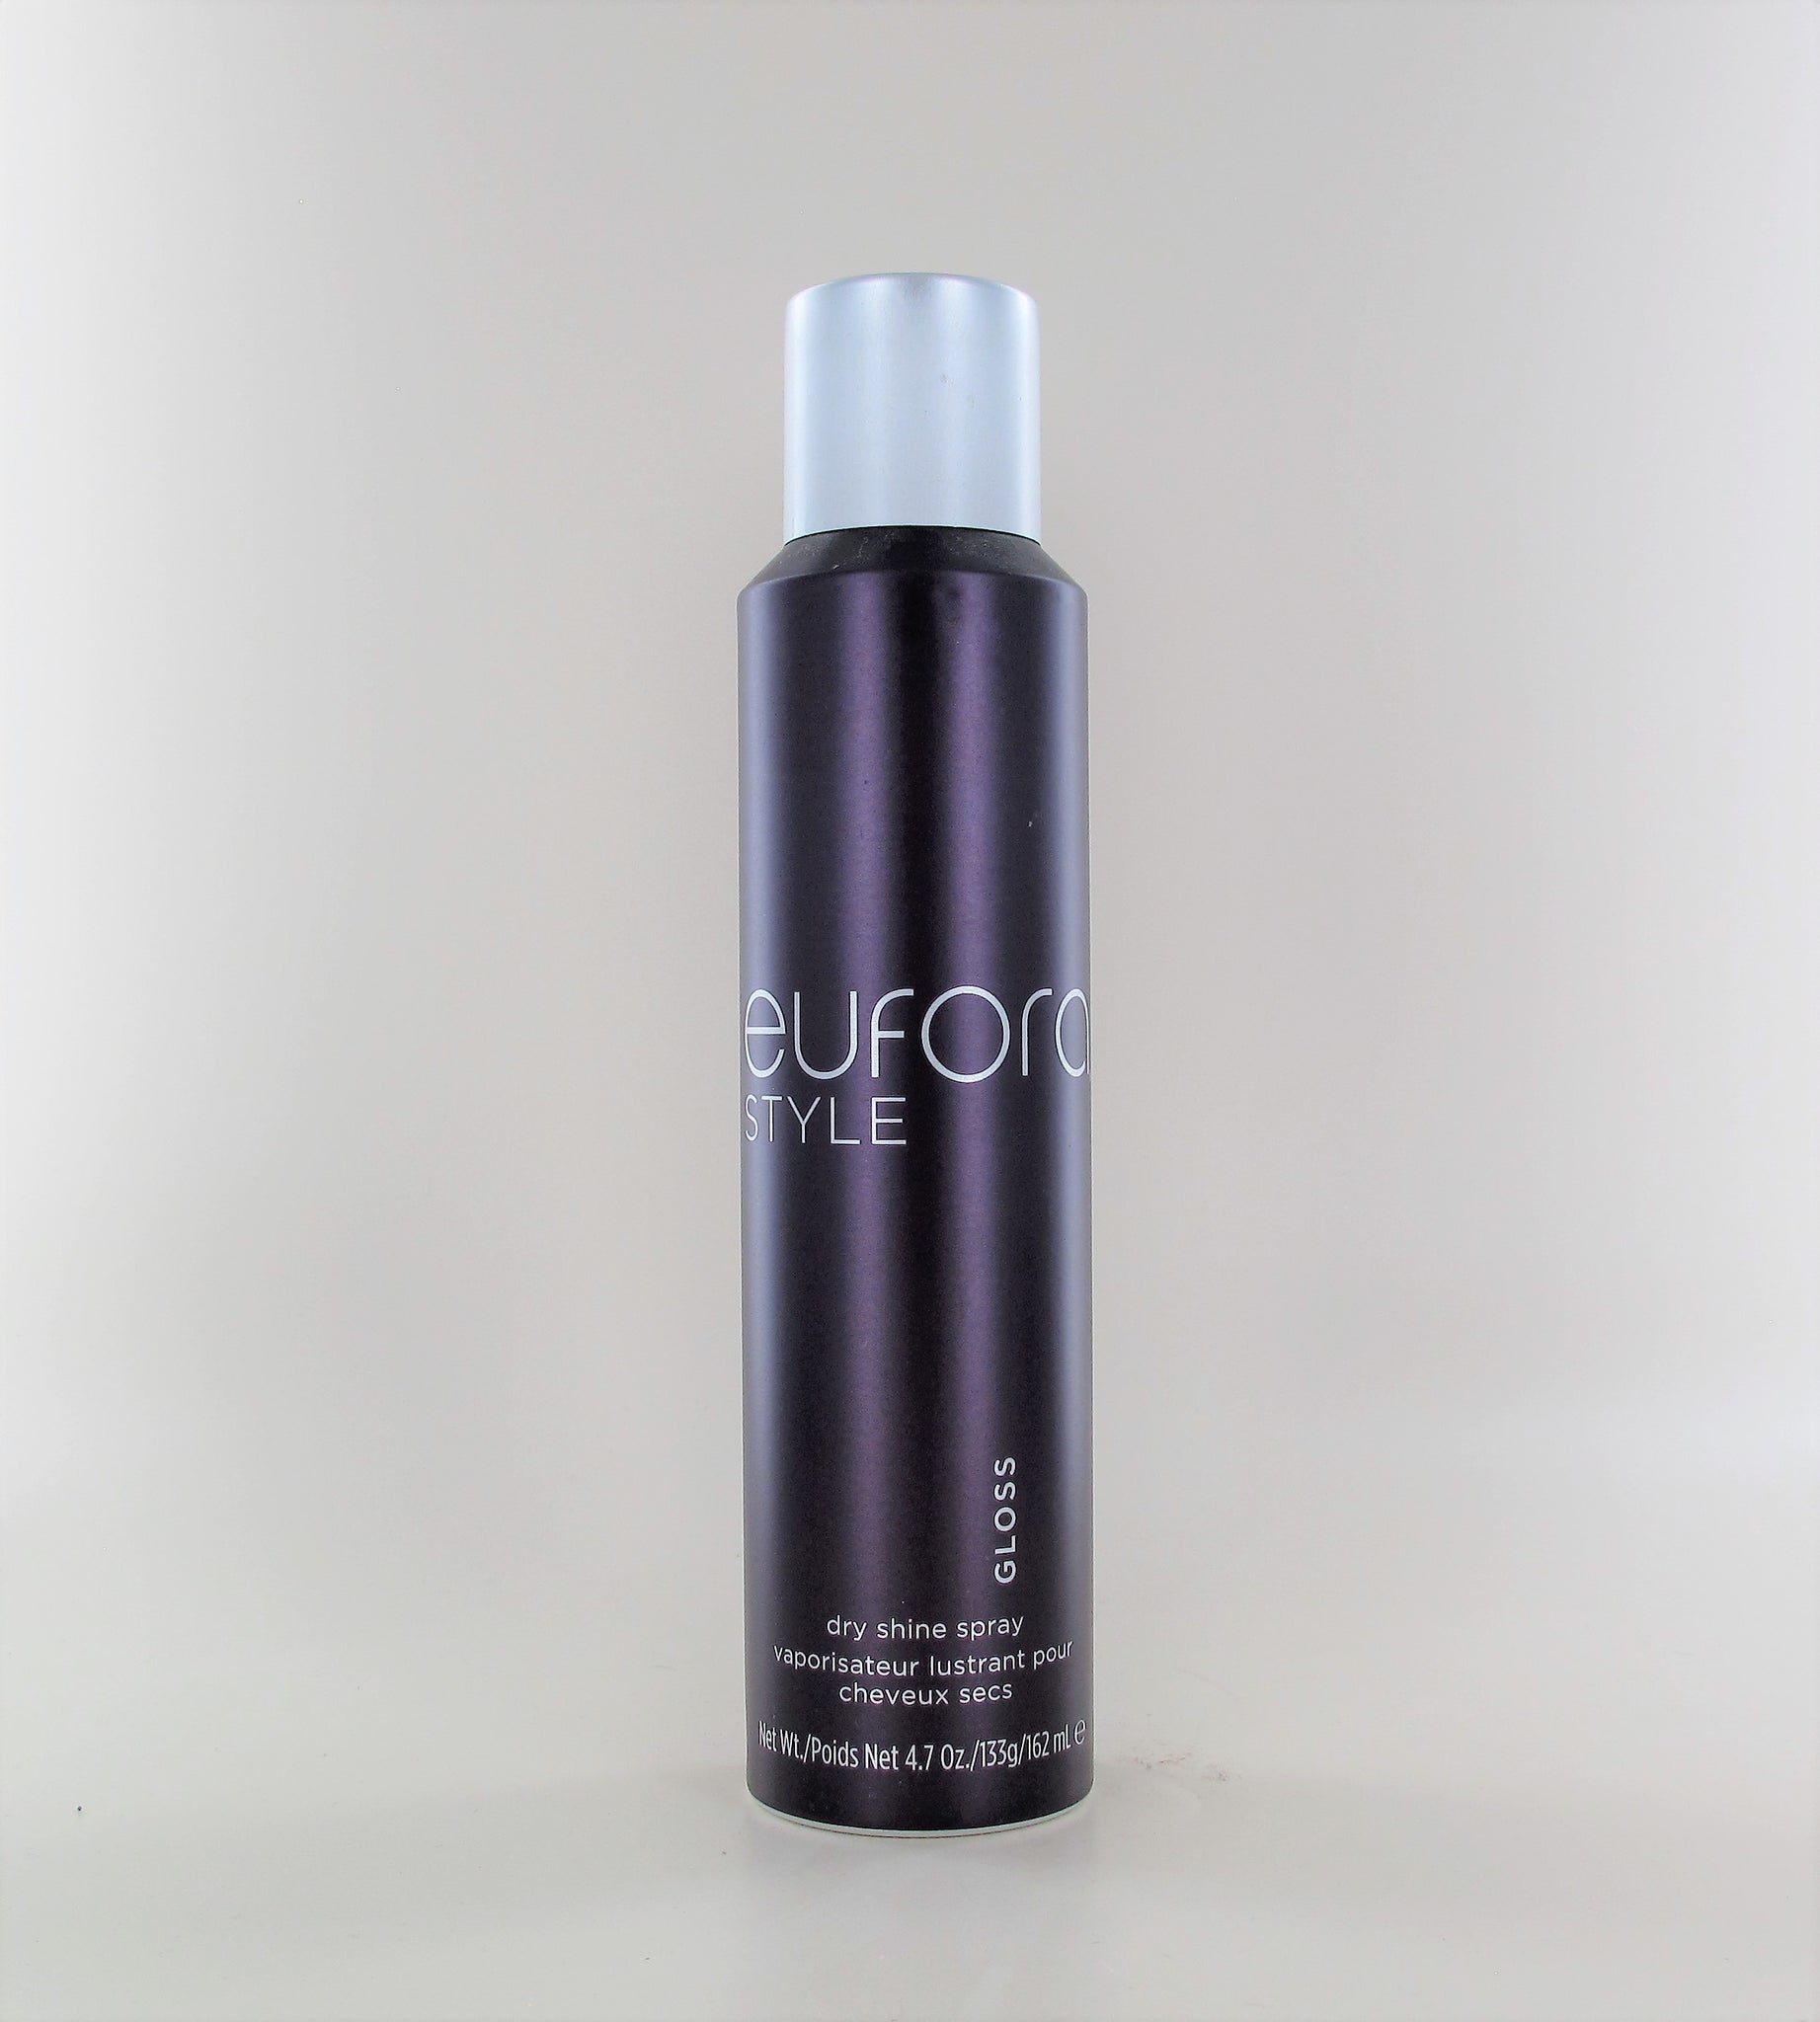 Eufora Style Gloss Dry Shine Spray 4.7 oz